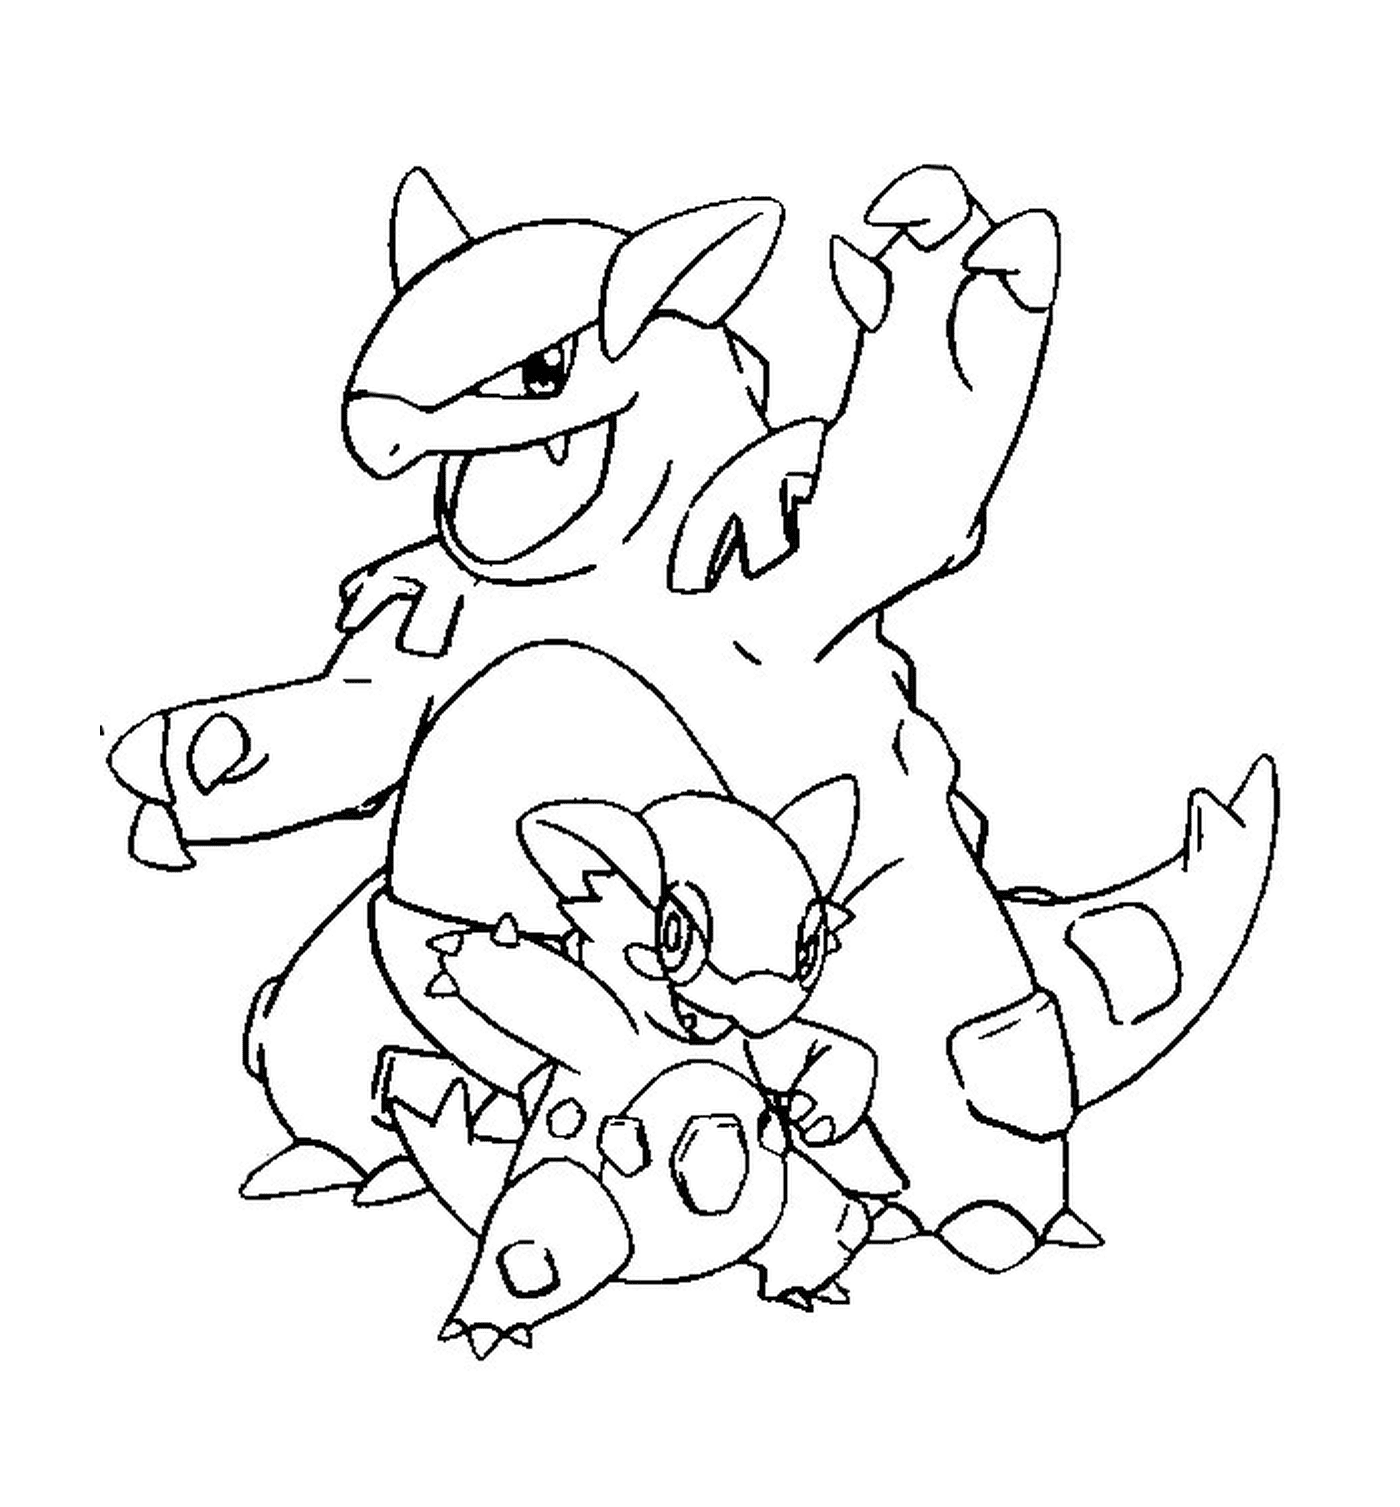  Кангурекс, два дуэта Pokémon 